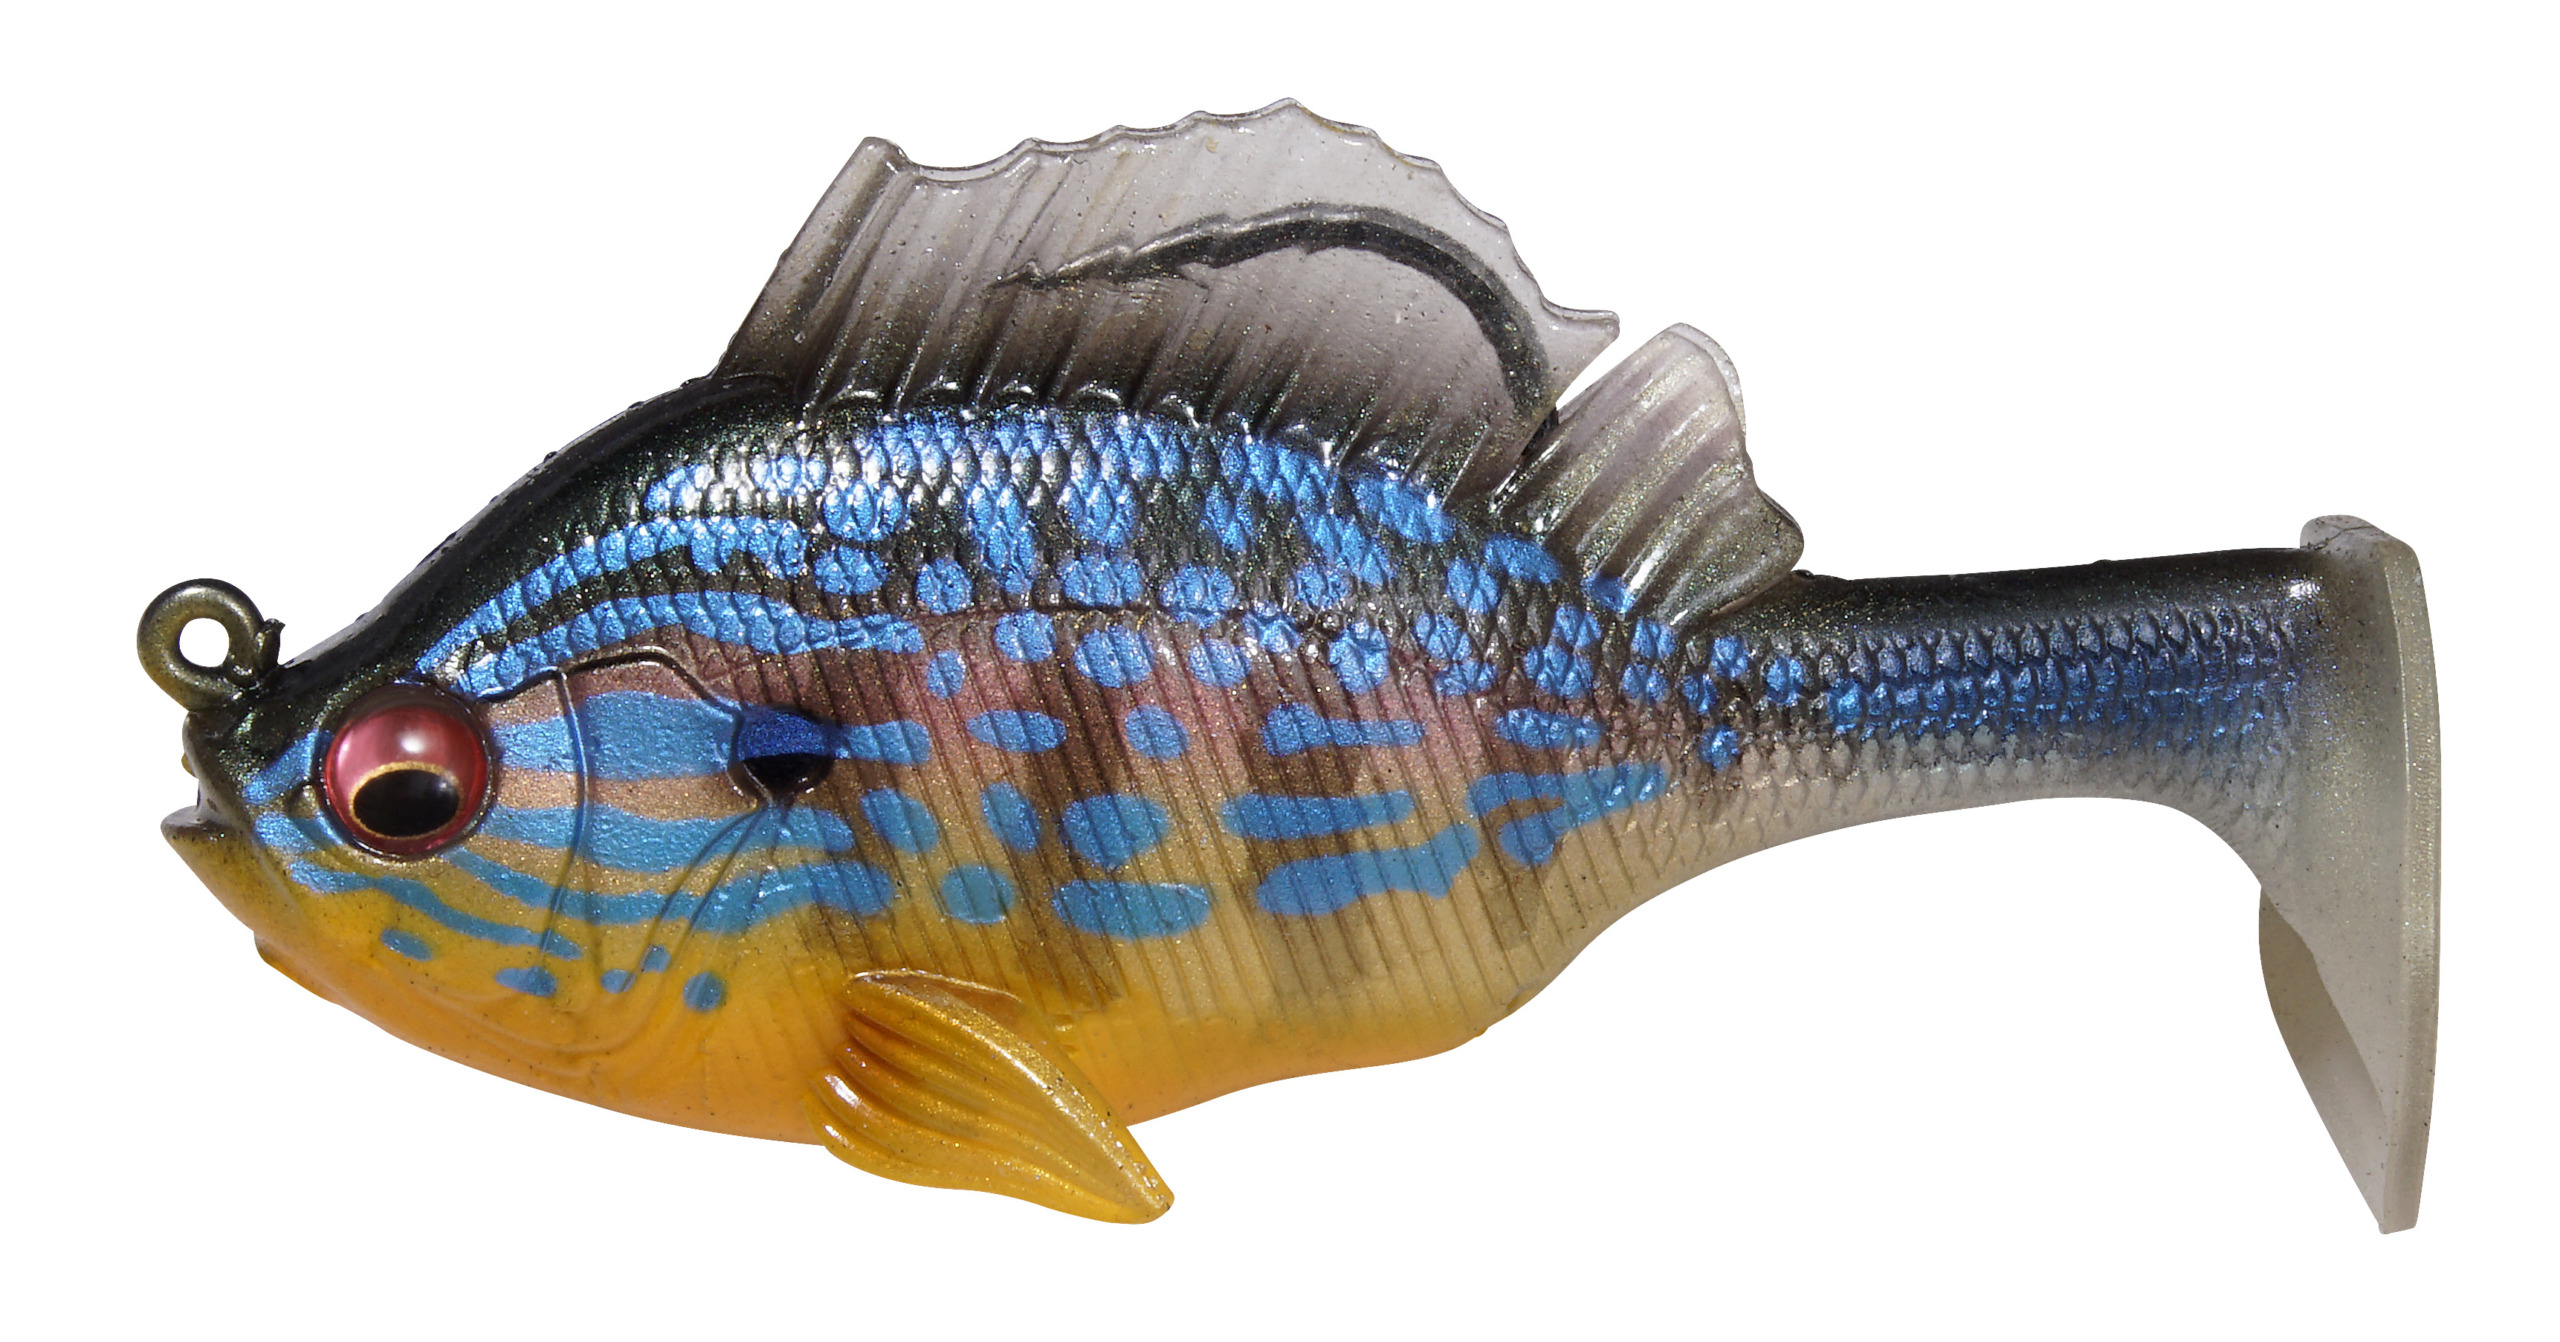  DIAXXH Natural Bait Scent Fish Attractants for Baits